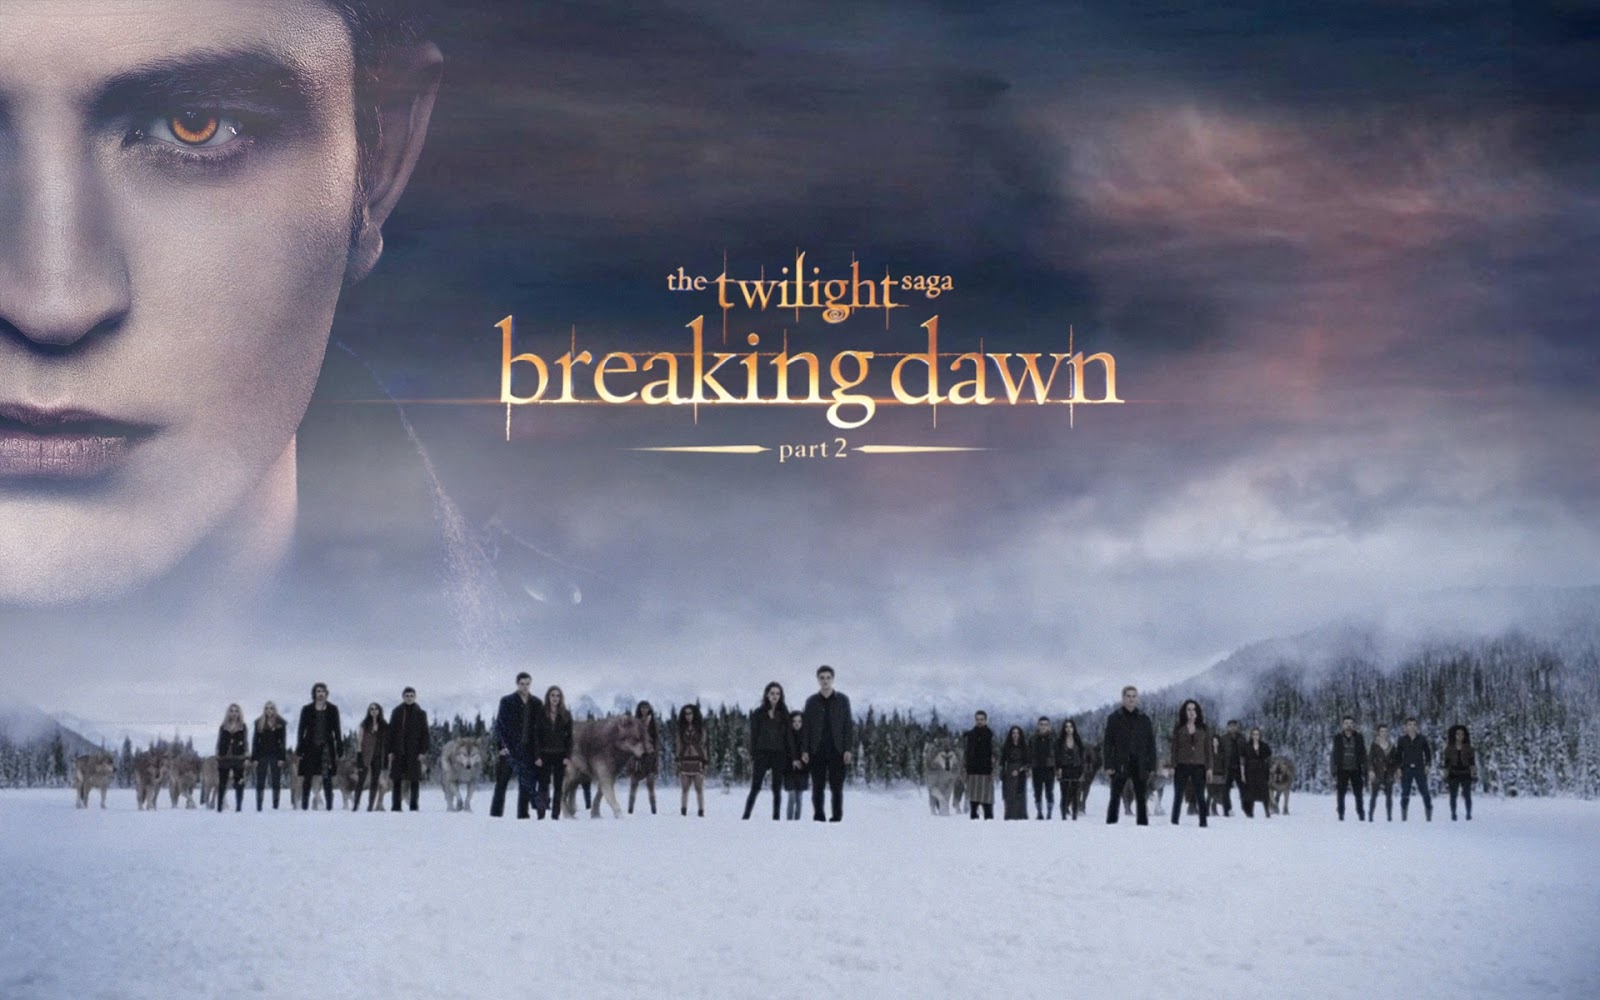 The Twilight Saga: Breaking Dawn – Part 2 - Final War | Movie Flicker1600 x 1000